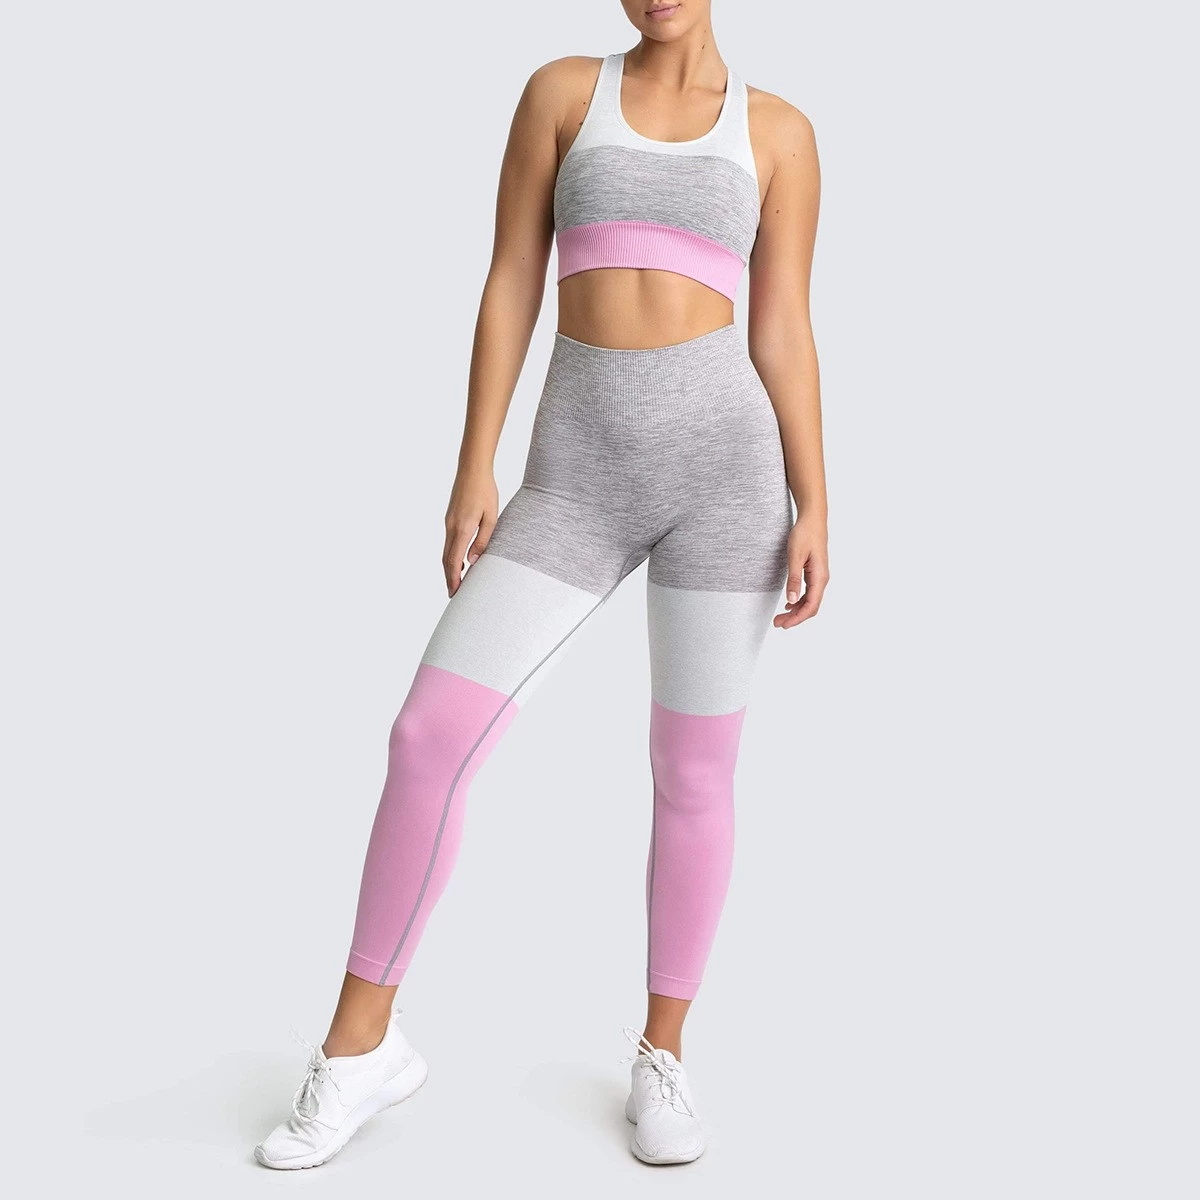 S-SHAPER Workout Sets for Women 2 Piece Workout Outfits Sports Seamless High Waist Yoga Gym Leggings Sleeveless Crop Tops Activewear